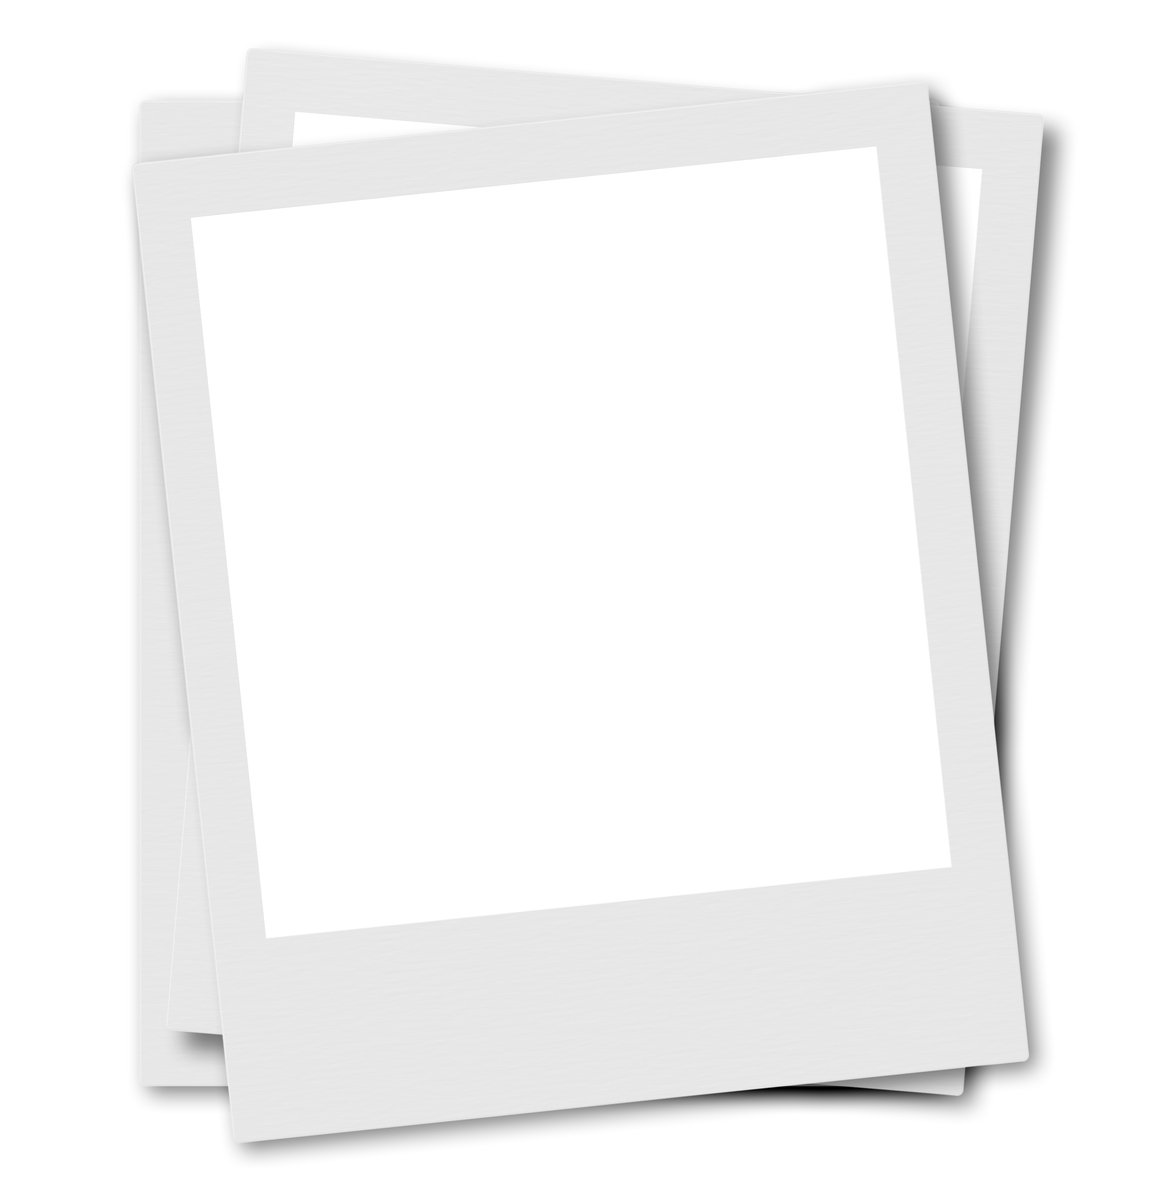 three white frames on a white background